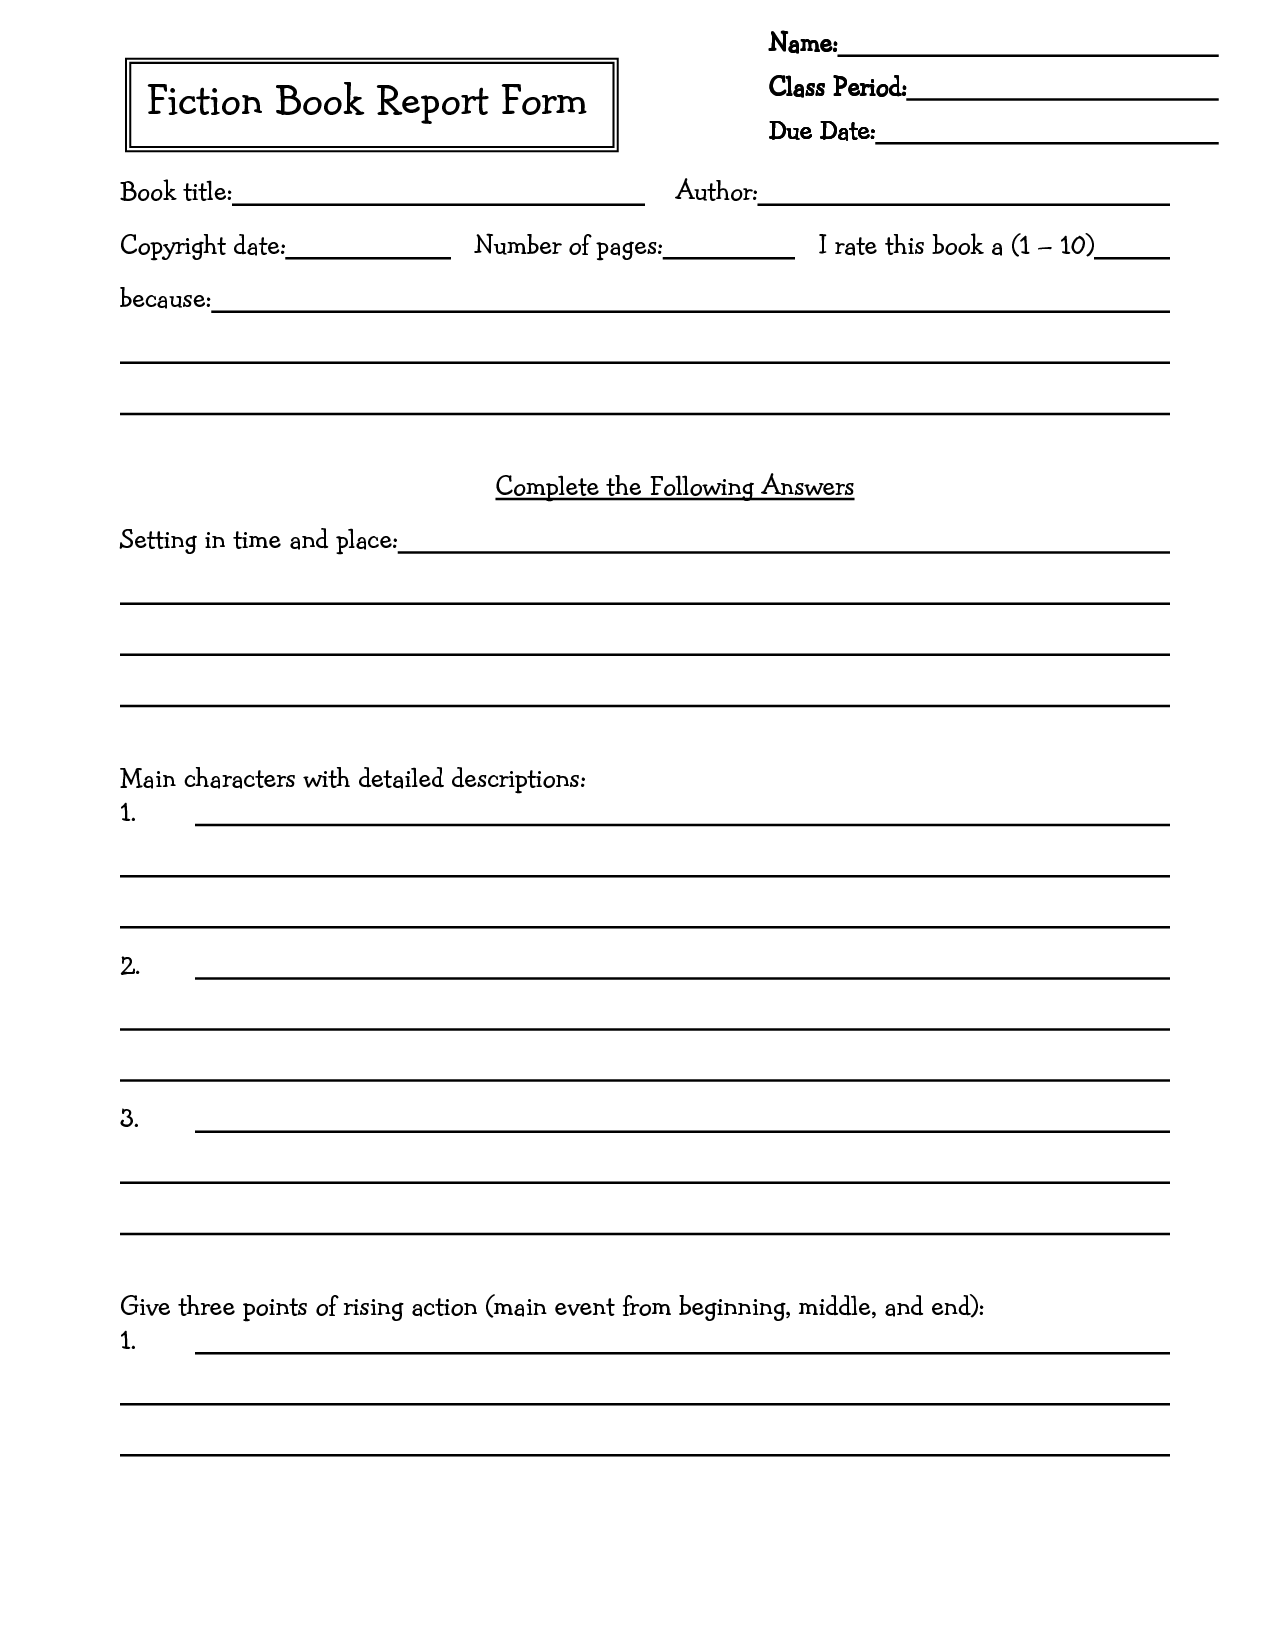 book-report-template-for-third-grade-homeworktidy-x-fc2